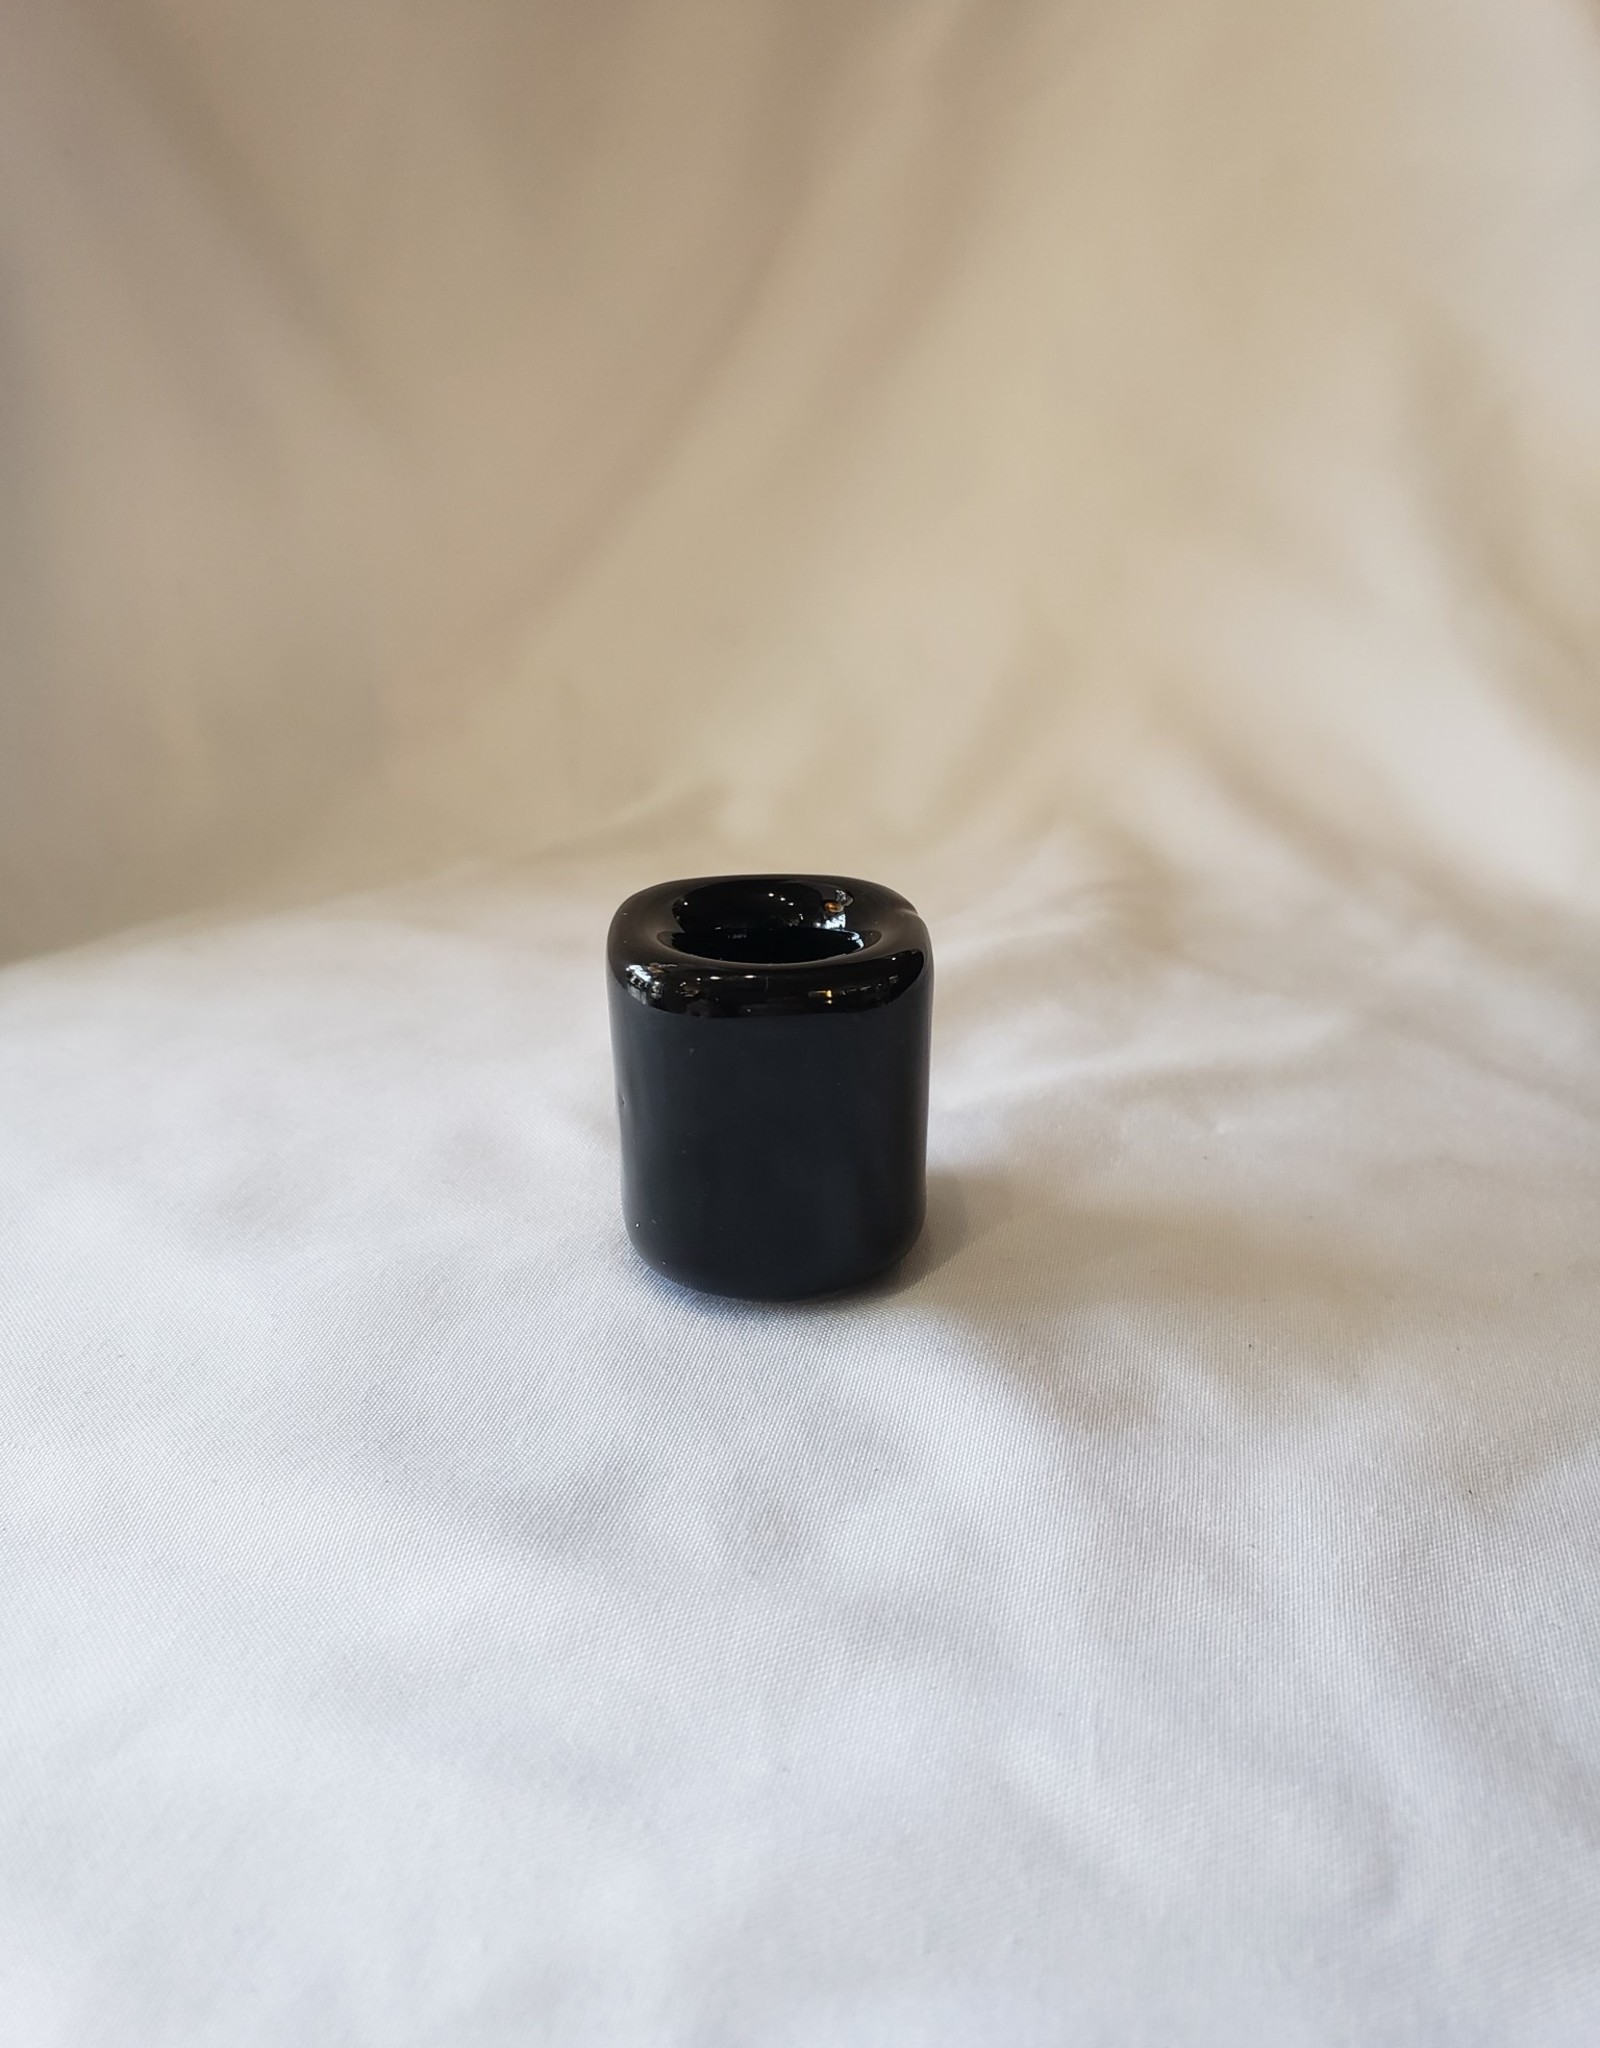 Ceramic Mini/Chime Candle Holder - Black